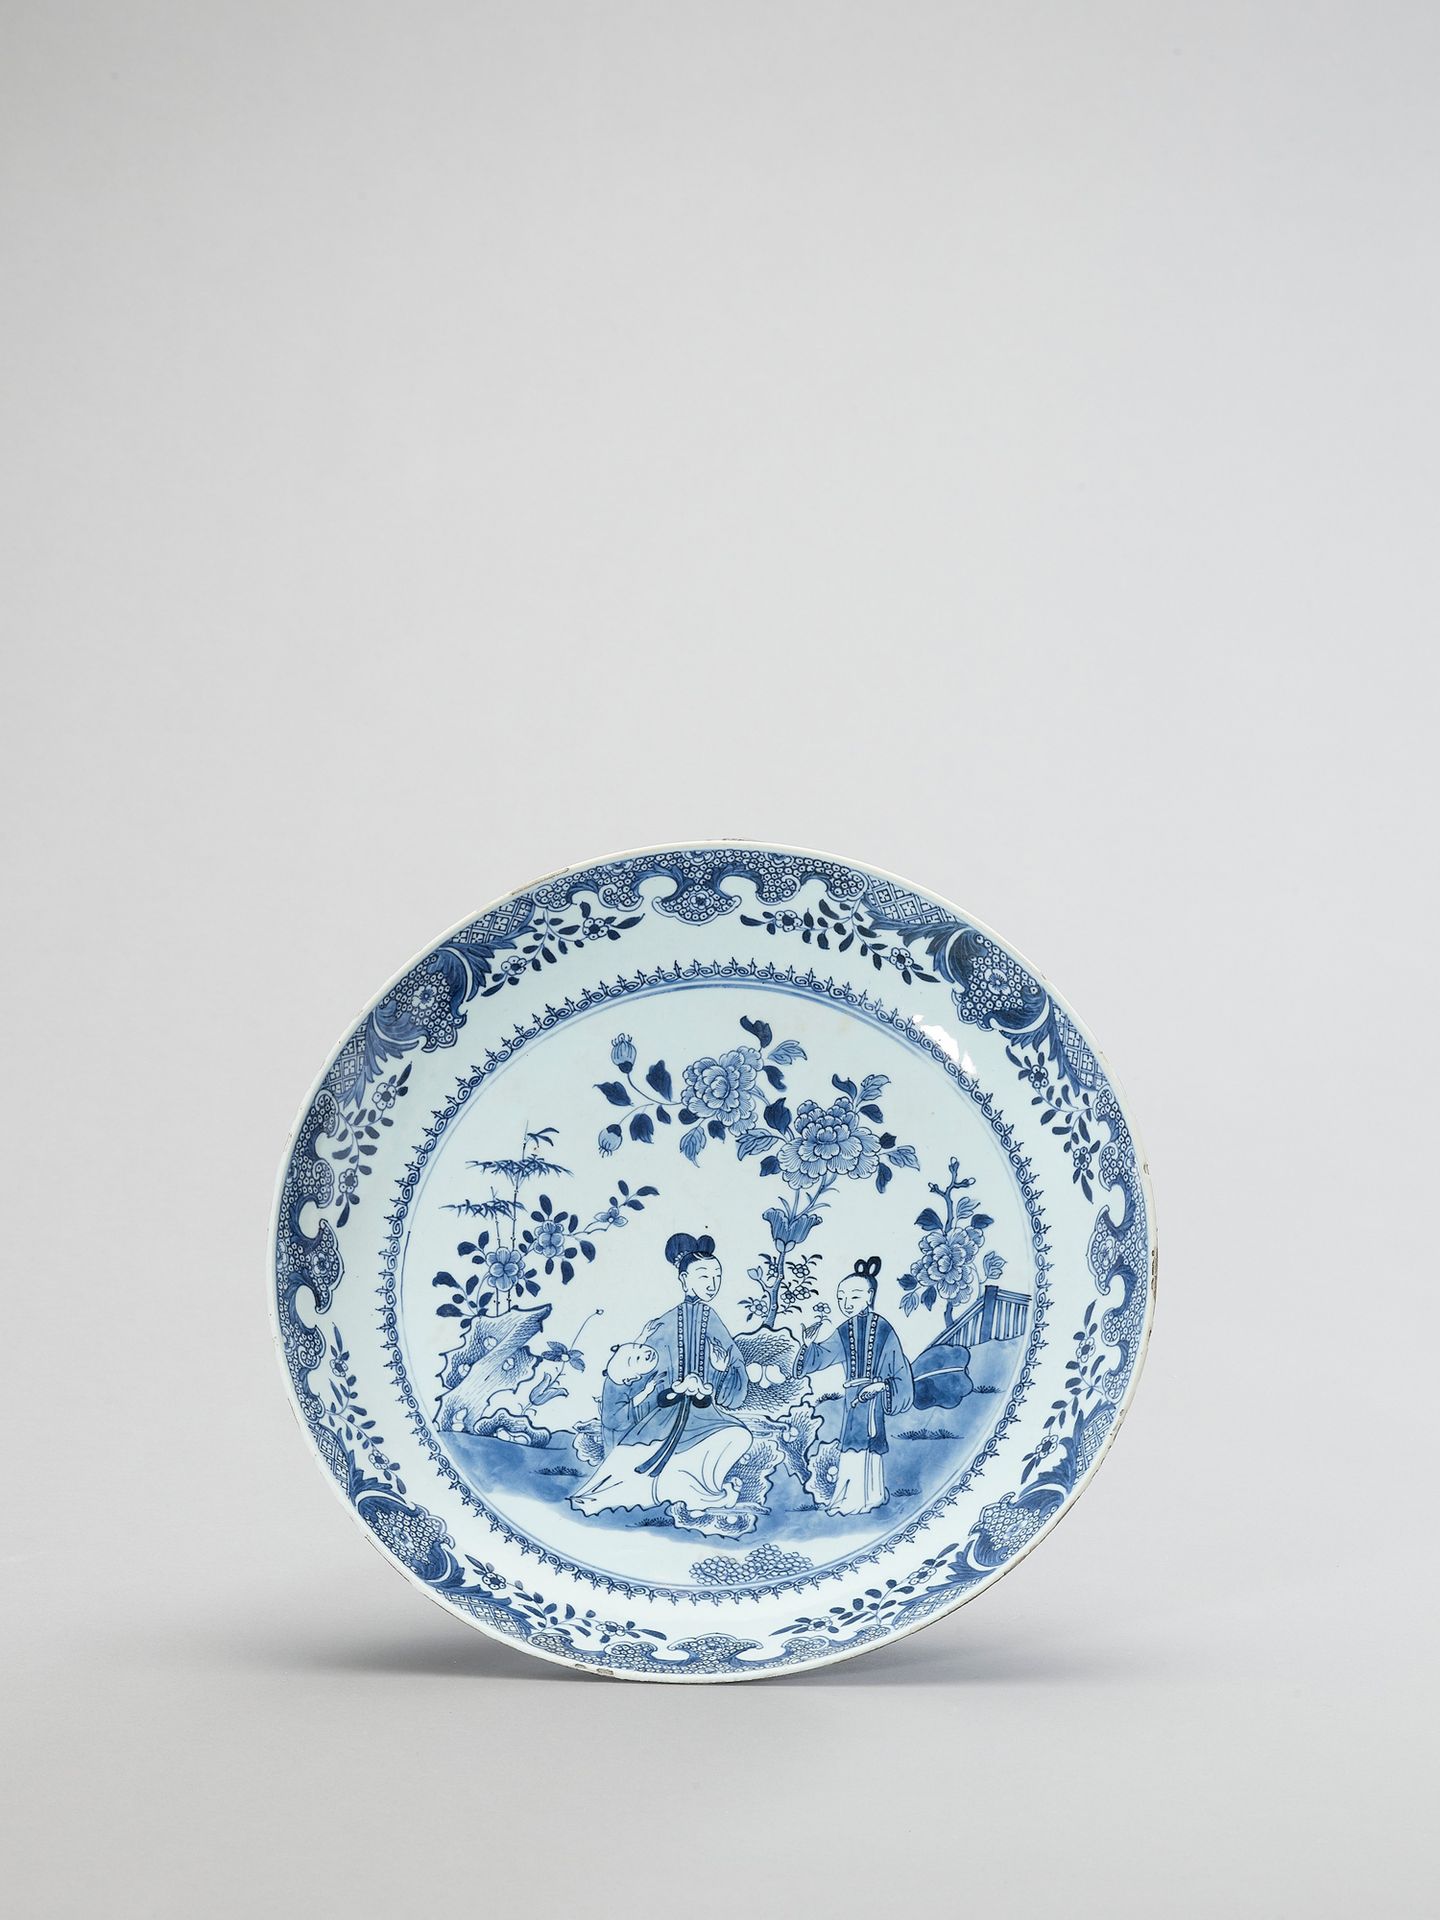 A LARGE BLUE AND WHITE PORCELAIN CHARGER 一个巨大的蓝白瓷杯
中国，乾隆时期（1736-1795）。釉下青花装饰着一位女&hellip;